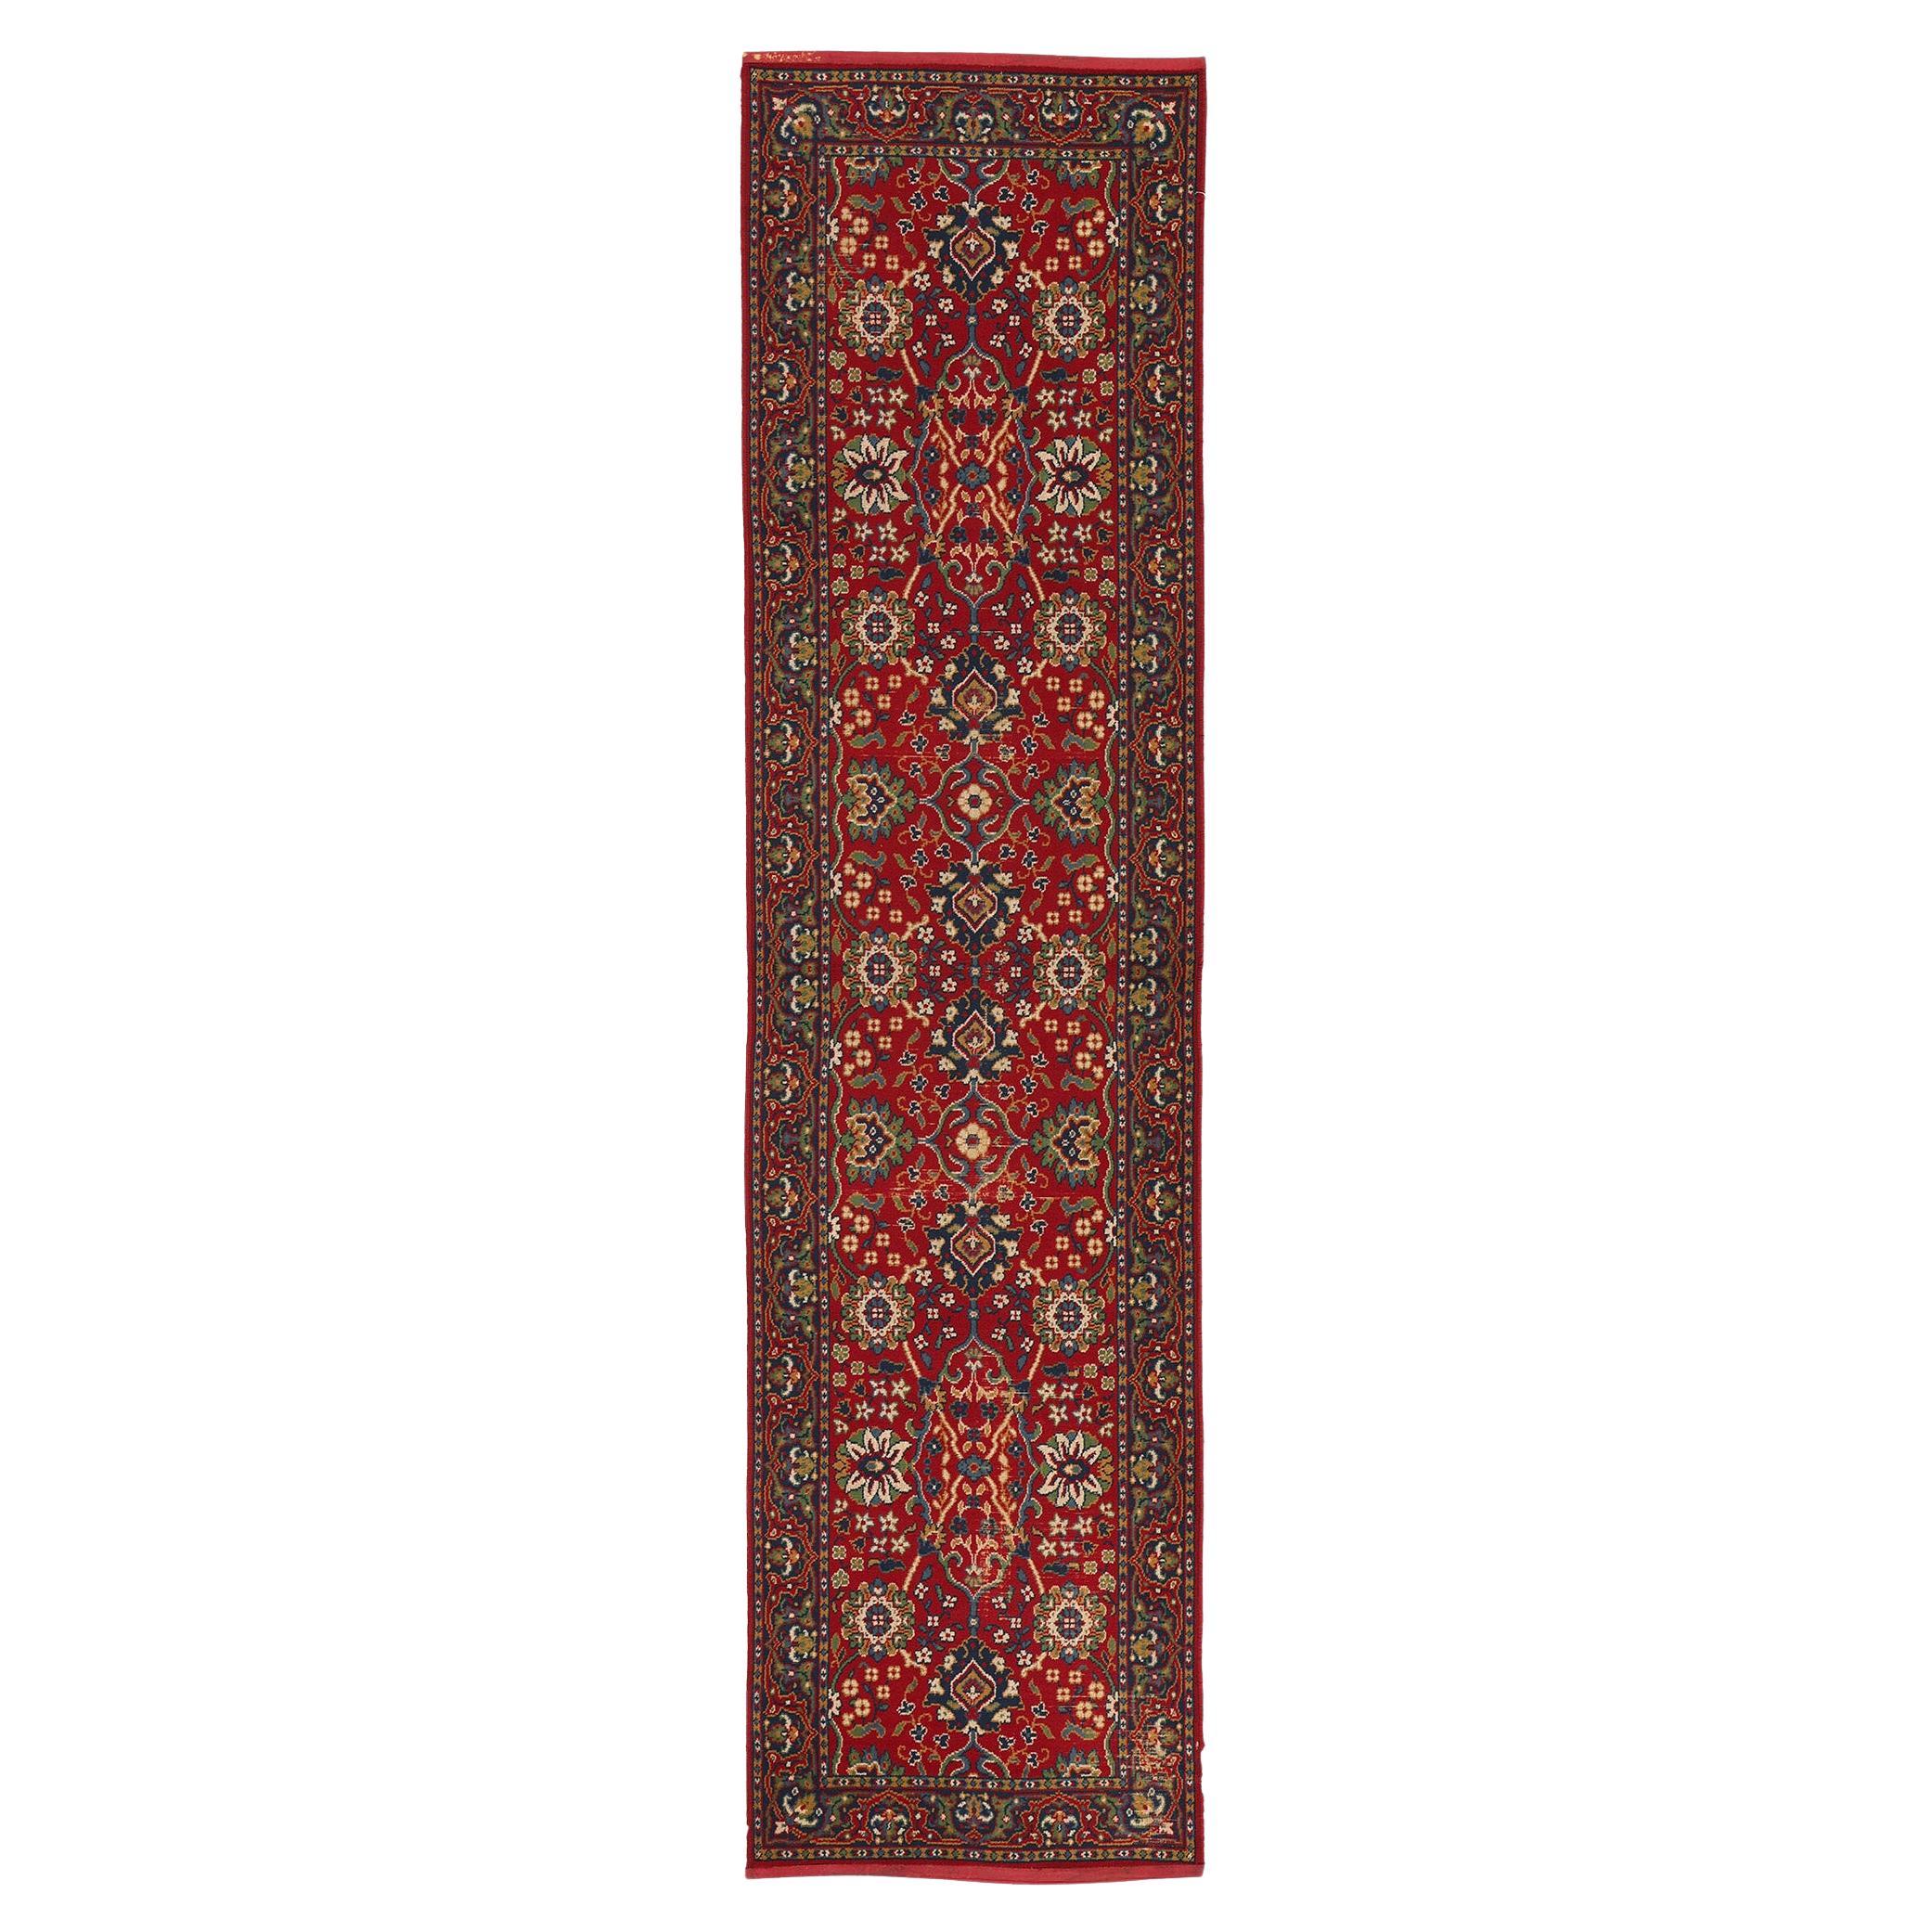 Antique European Persian Floral Rug For Sale